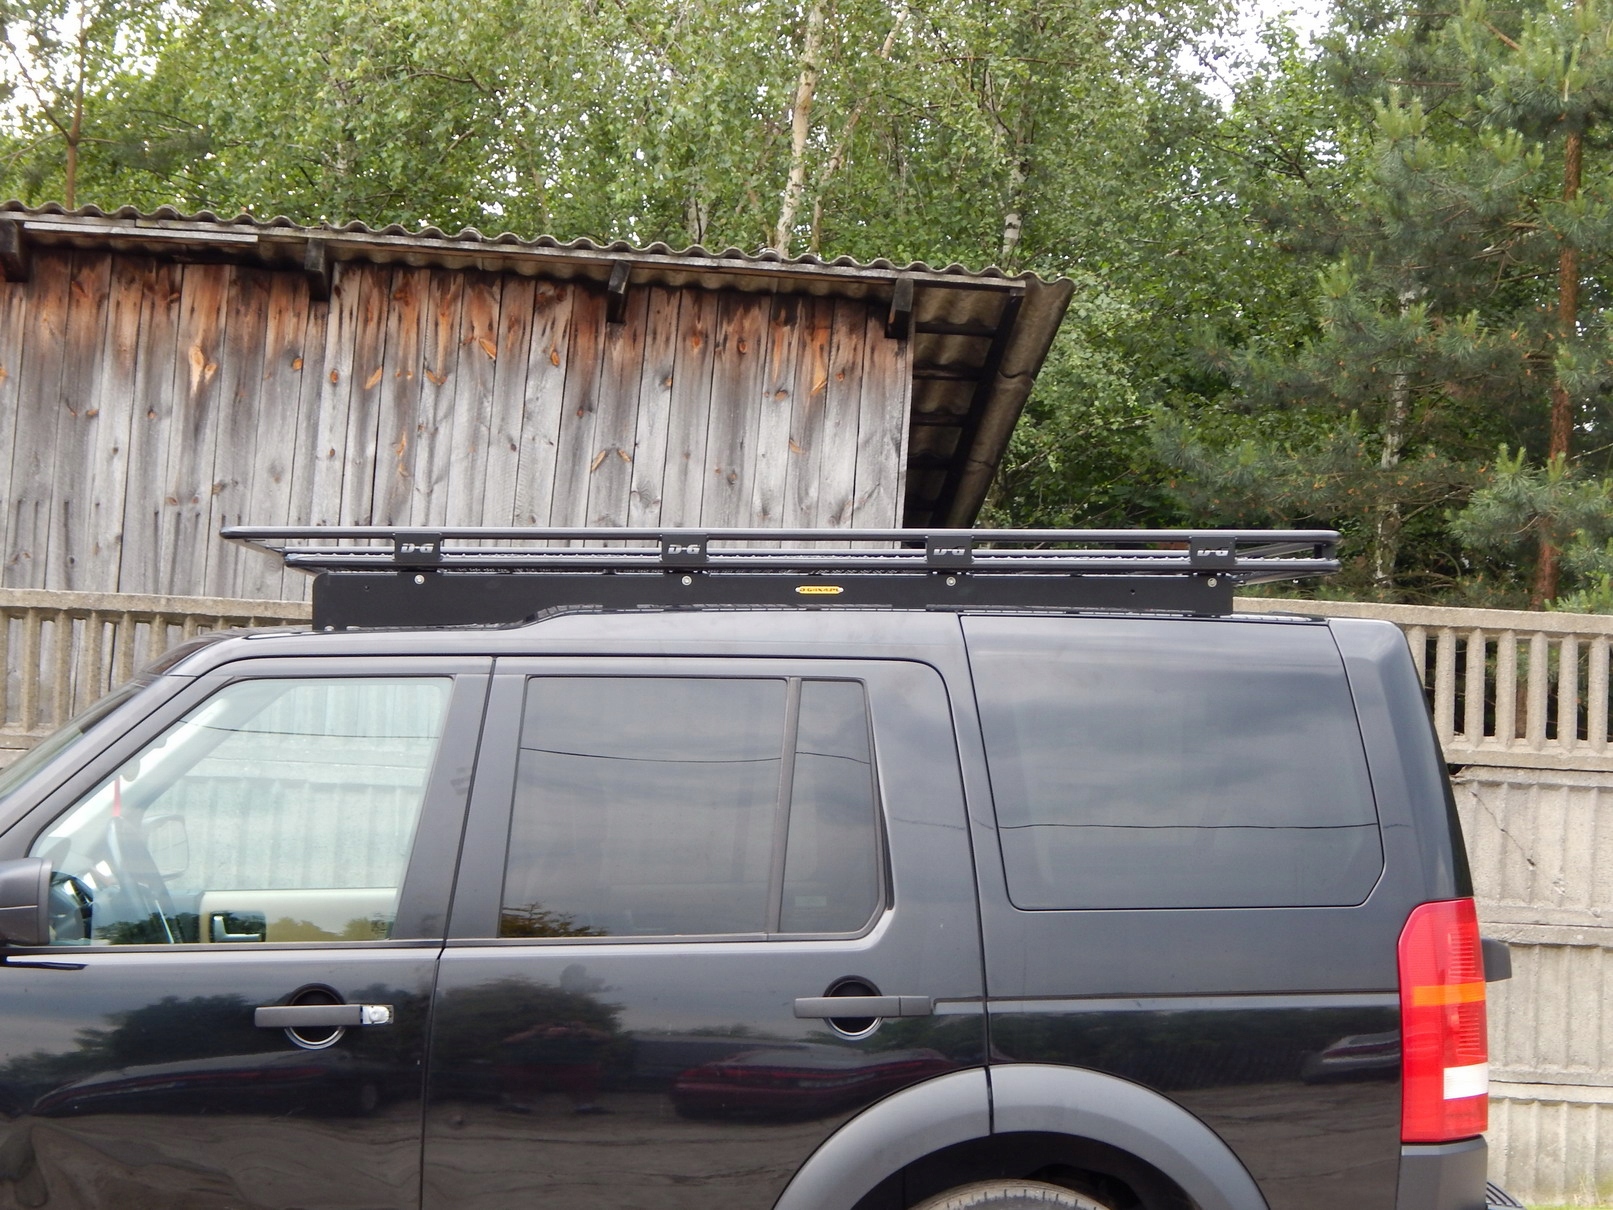 Дискавери крыша. Land Rover Discovery 3 багажник на крышу. Land Rover Discovery 4 багажник на крышу. Ленд Ровер Дискавери 3 багажник. Экспедиционный багажник Discovery 4.